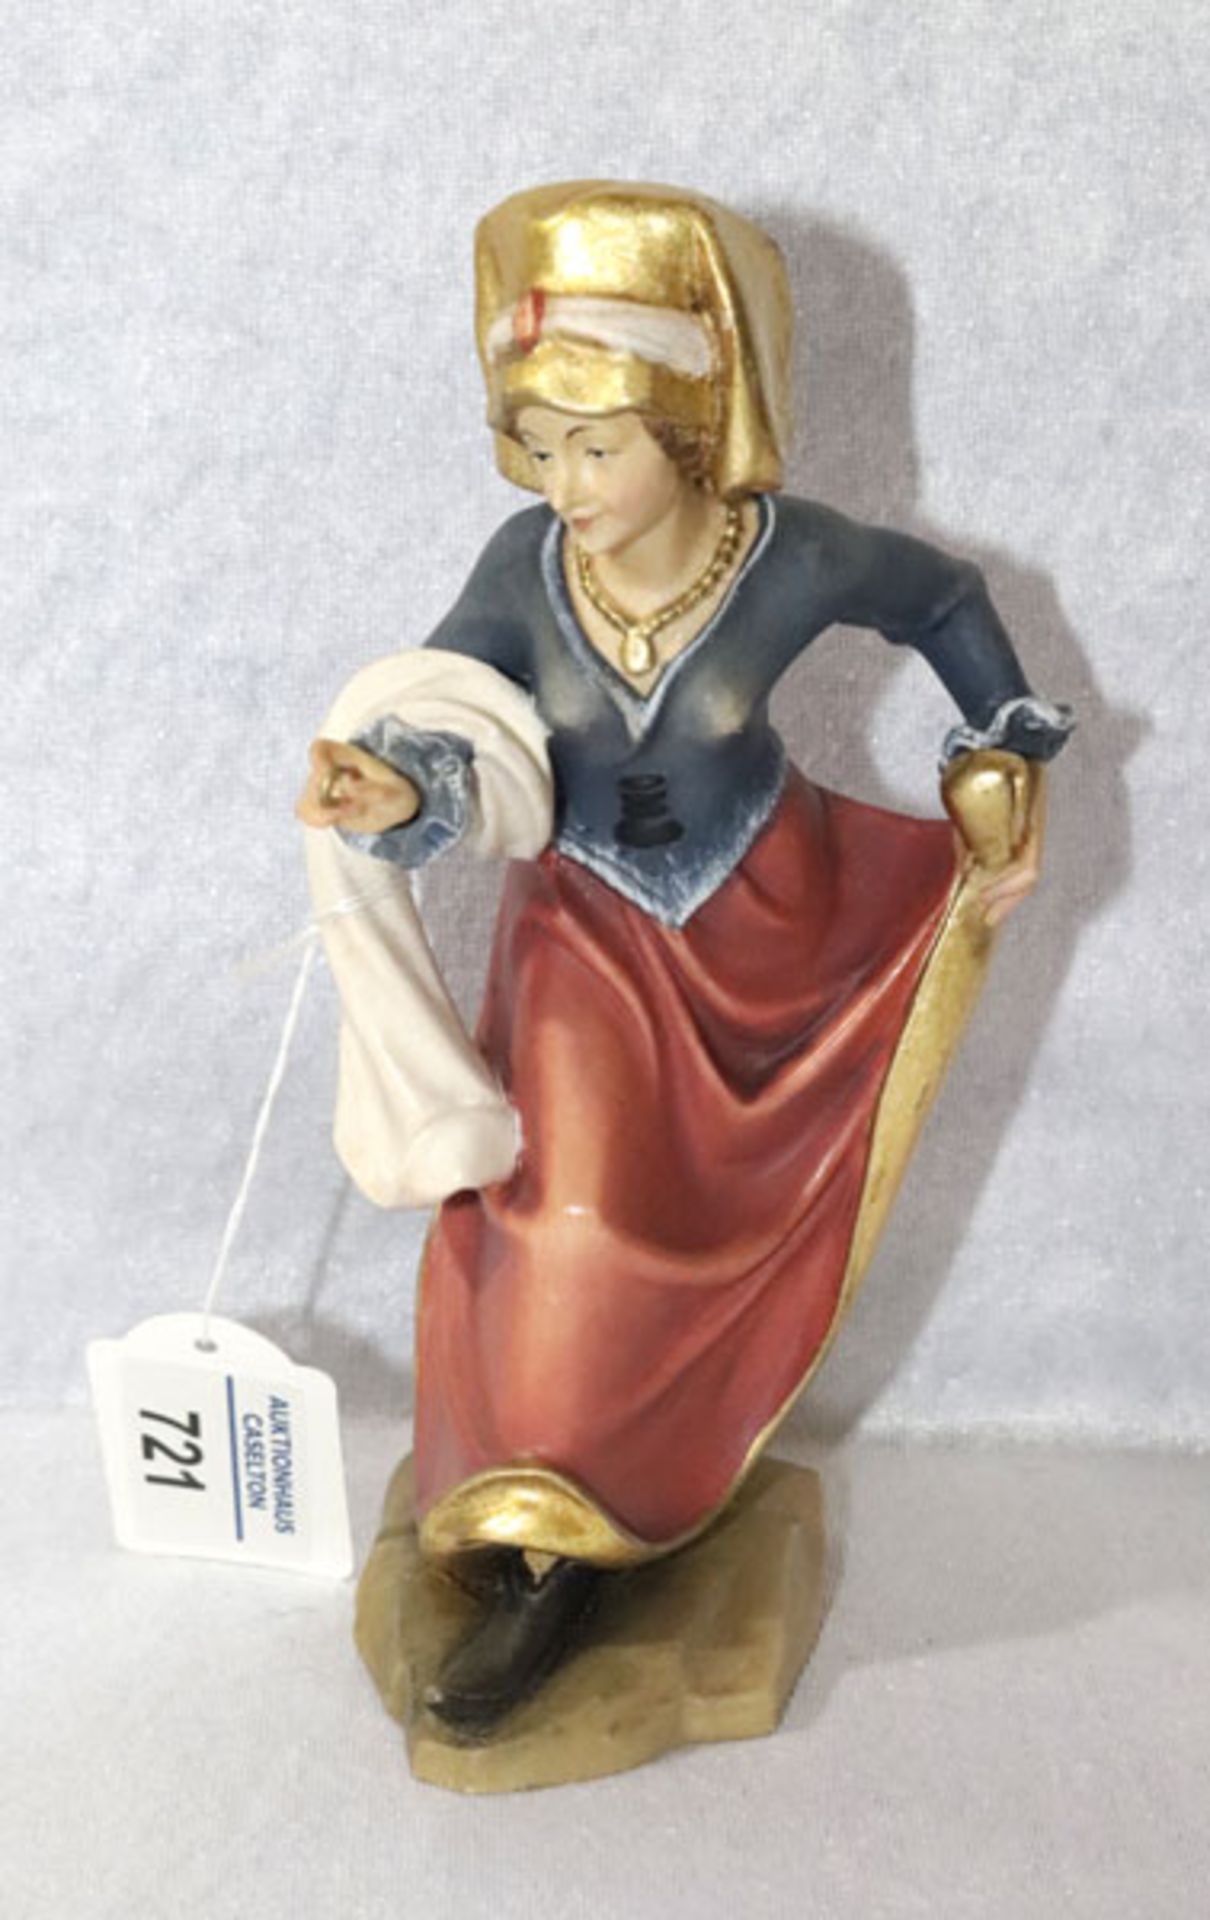 Holz Figurenskulptur 'Burgfräulein', farbig gefaßt, Holzbildhauerei Kreutz, Gröbenzell, H 18,5 cm